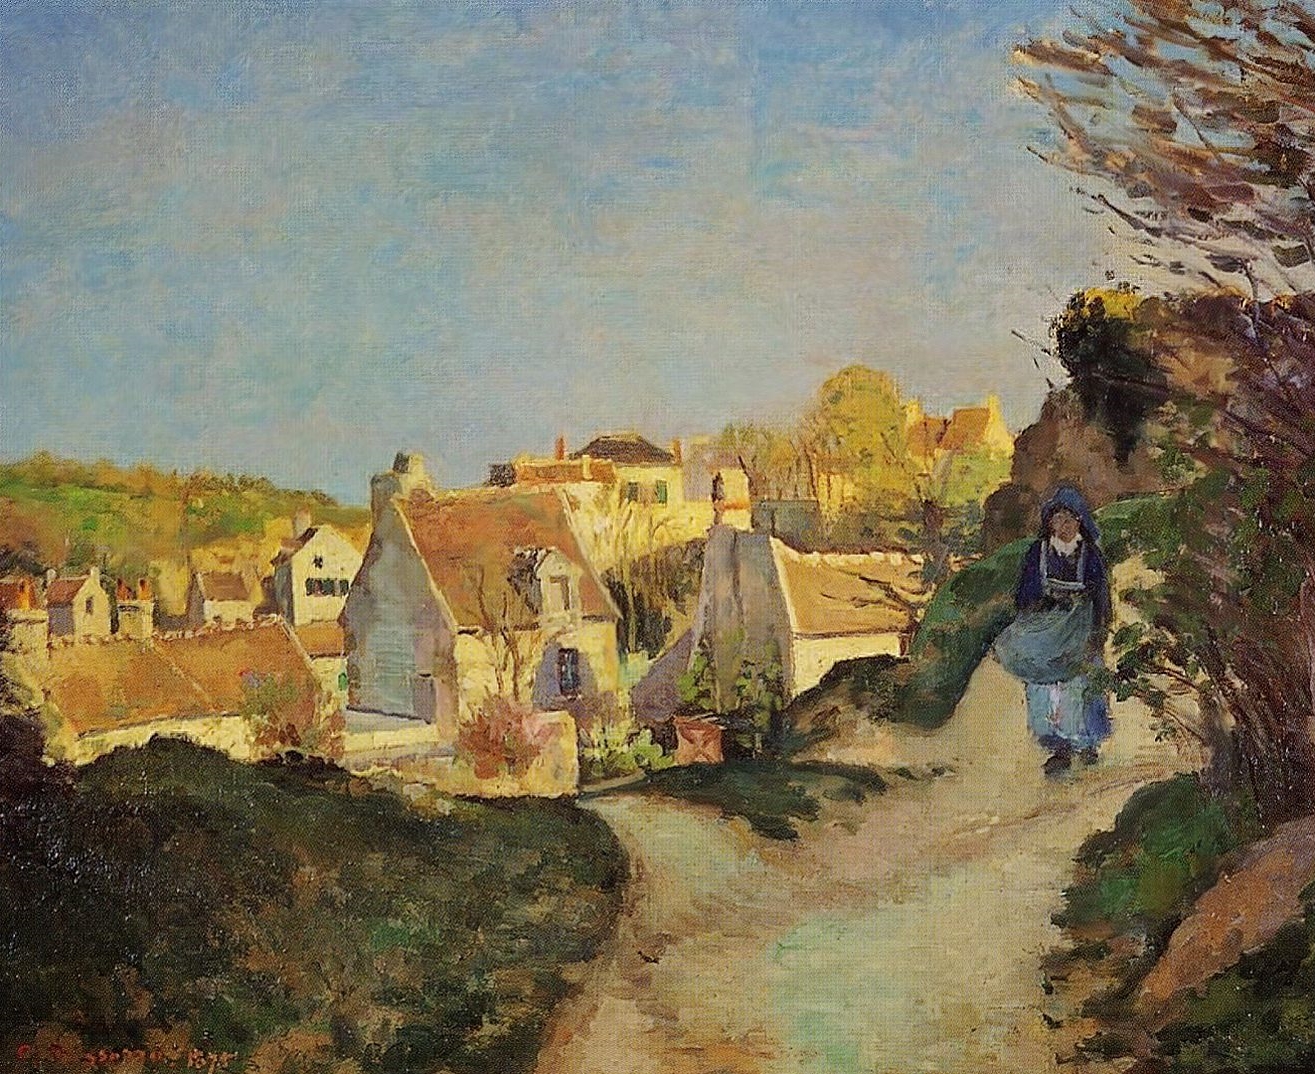 Camille+Pissarro-1830-1903 (310).jpg